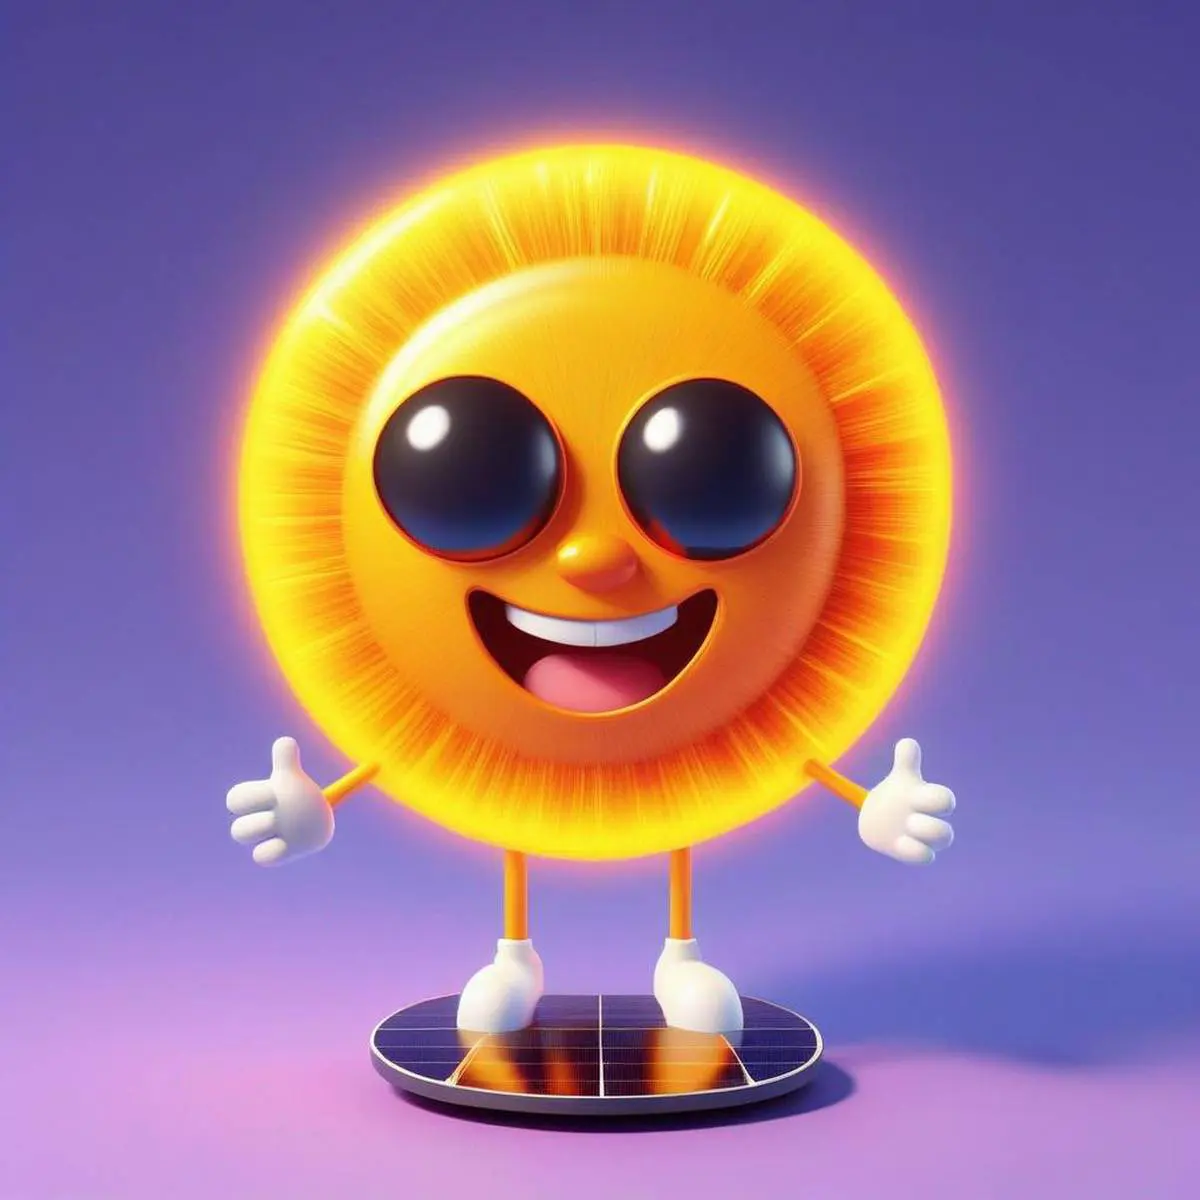 Solar puns